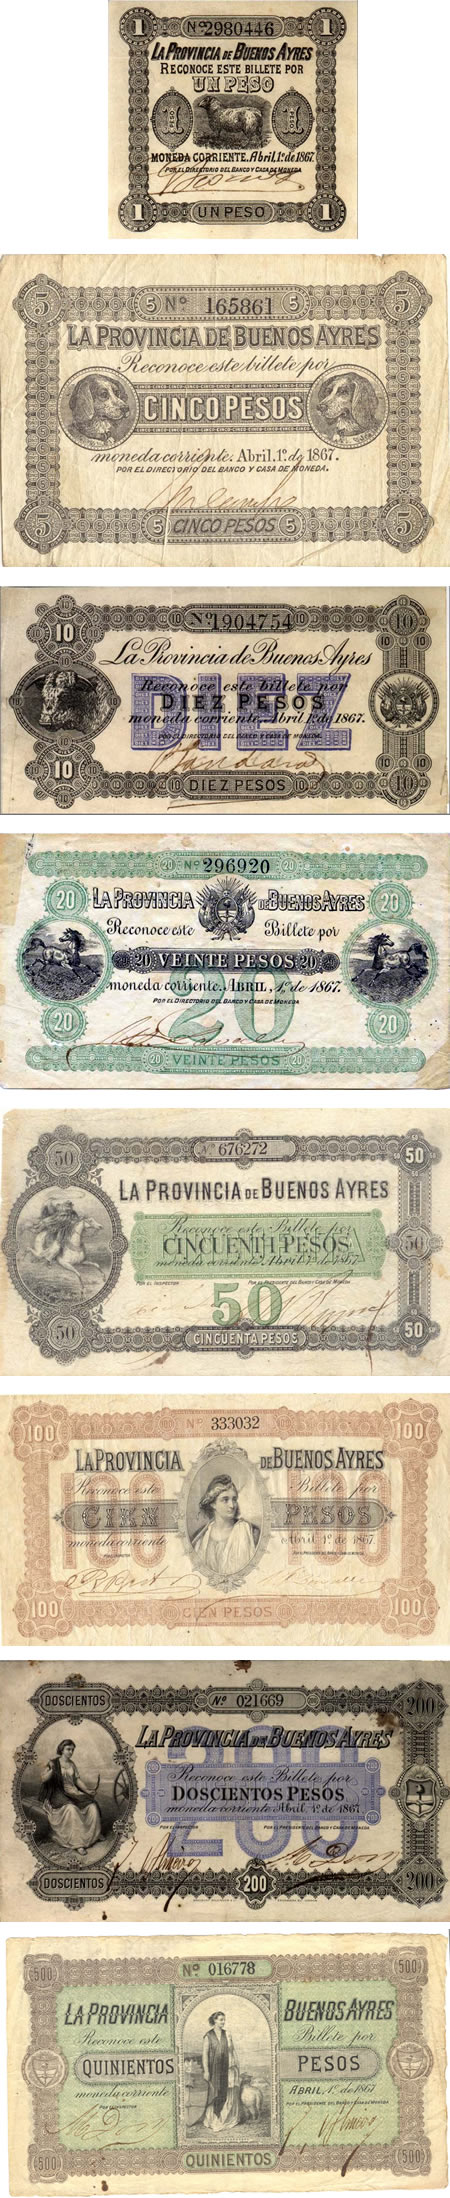 Billetes de la provincia de Buenos Aires